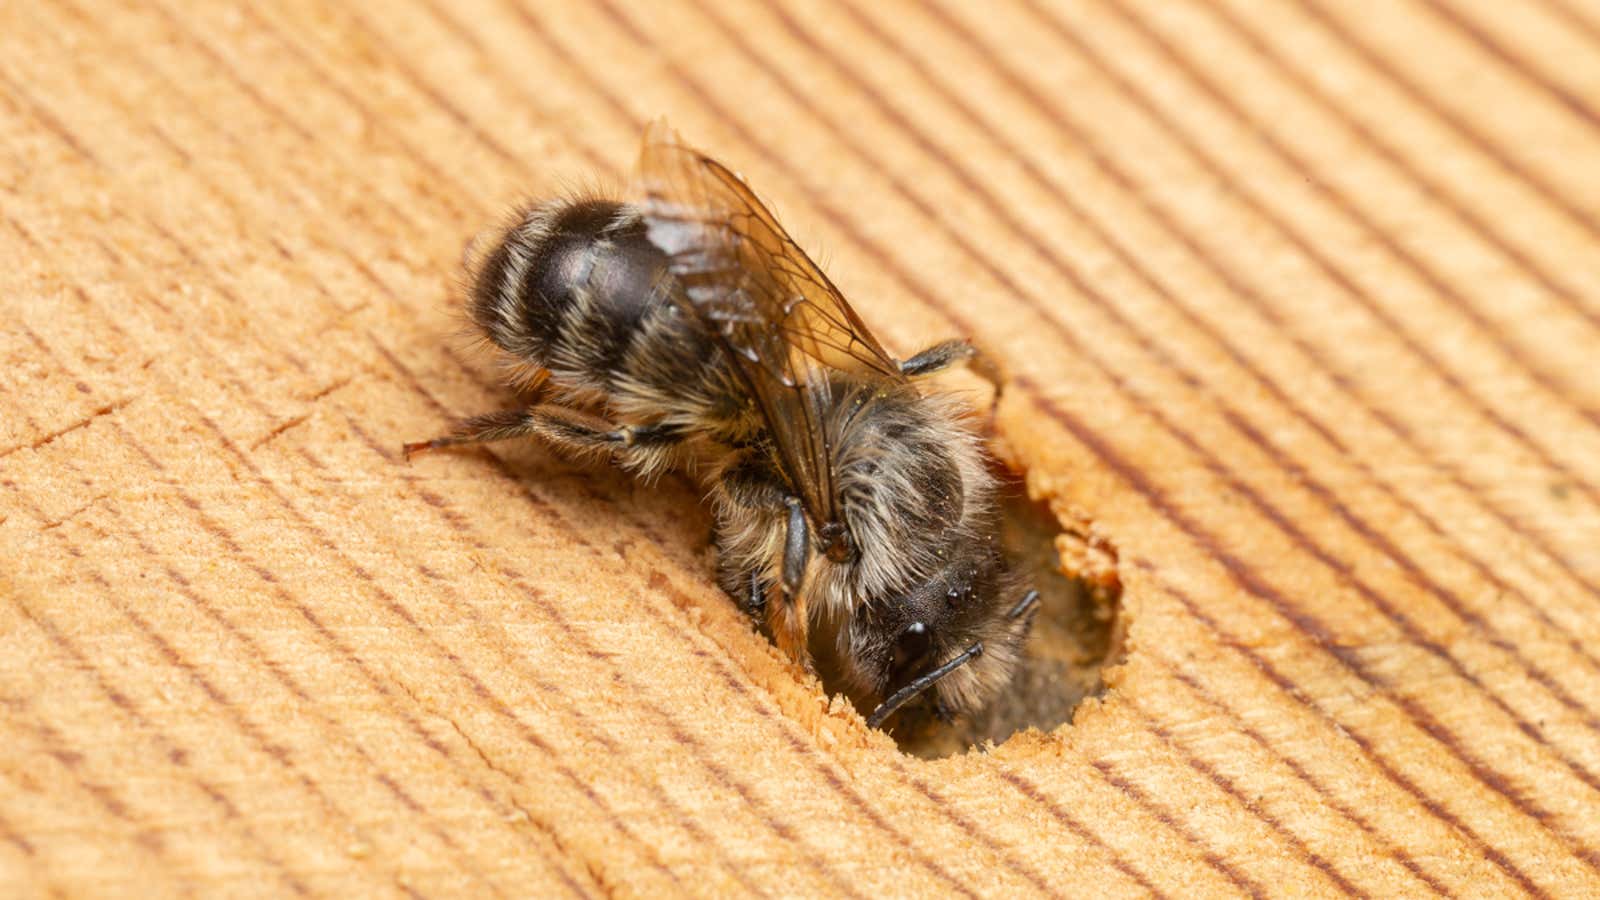 World's Smallest, Largest, and Weirdest Bee Species - The Best